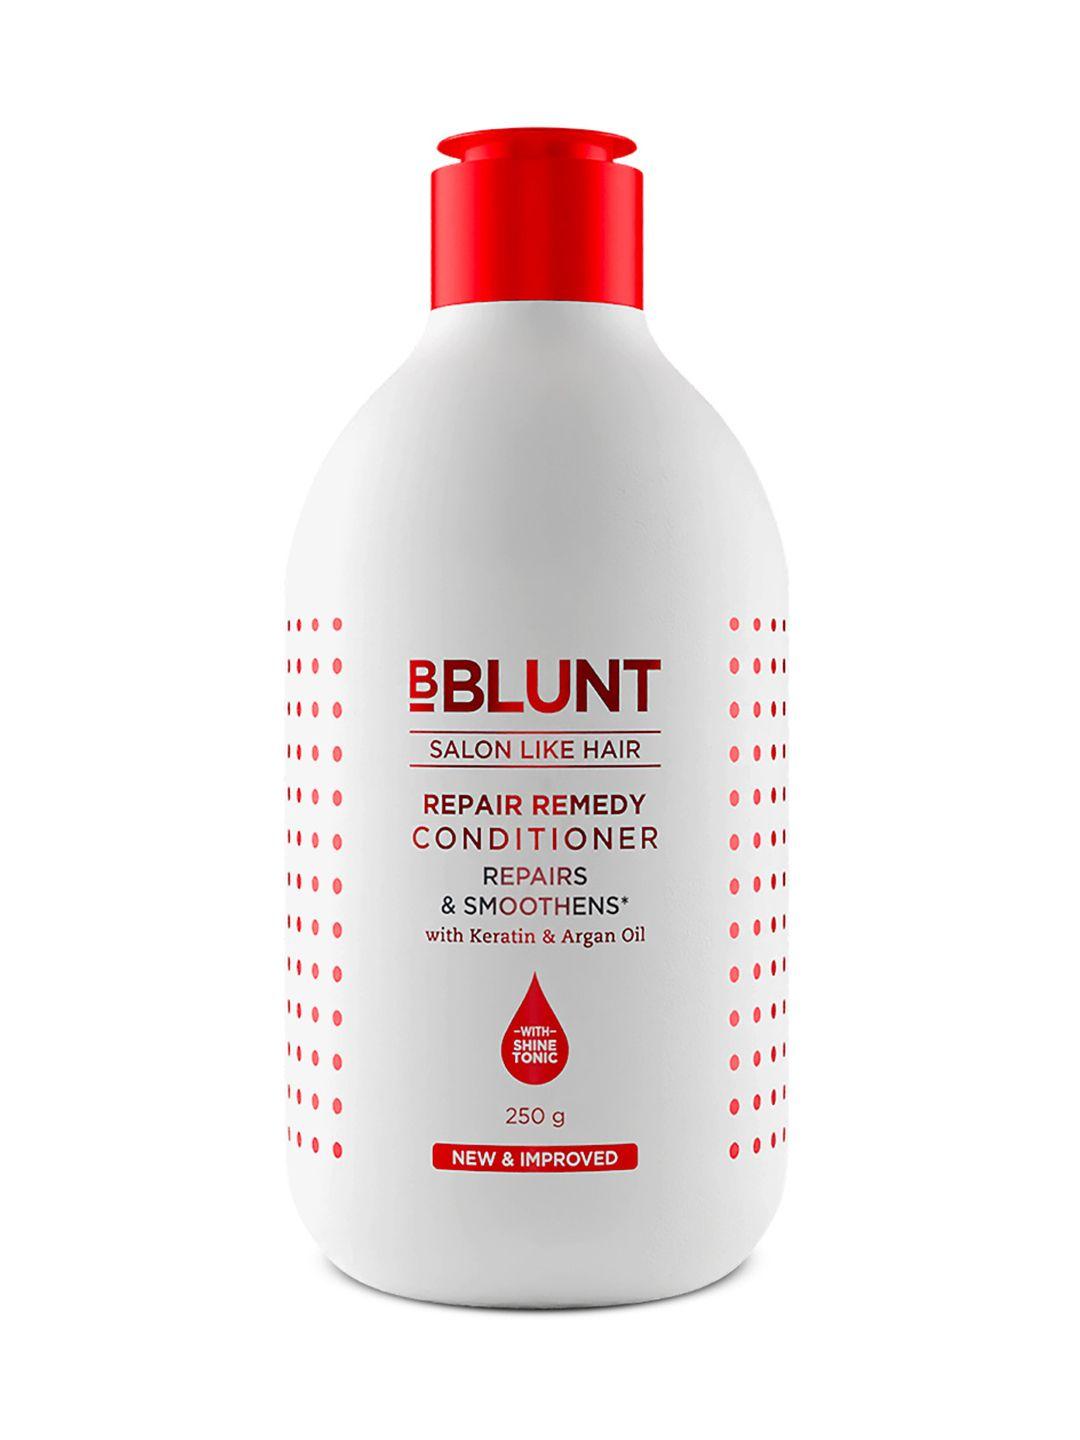 bblunt repair remedy hair conditioner with keratin & argan oil - 250g